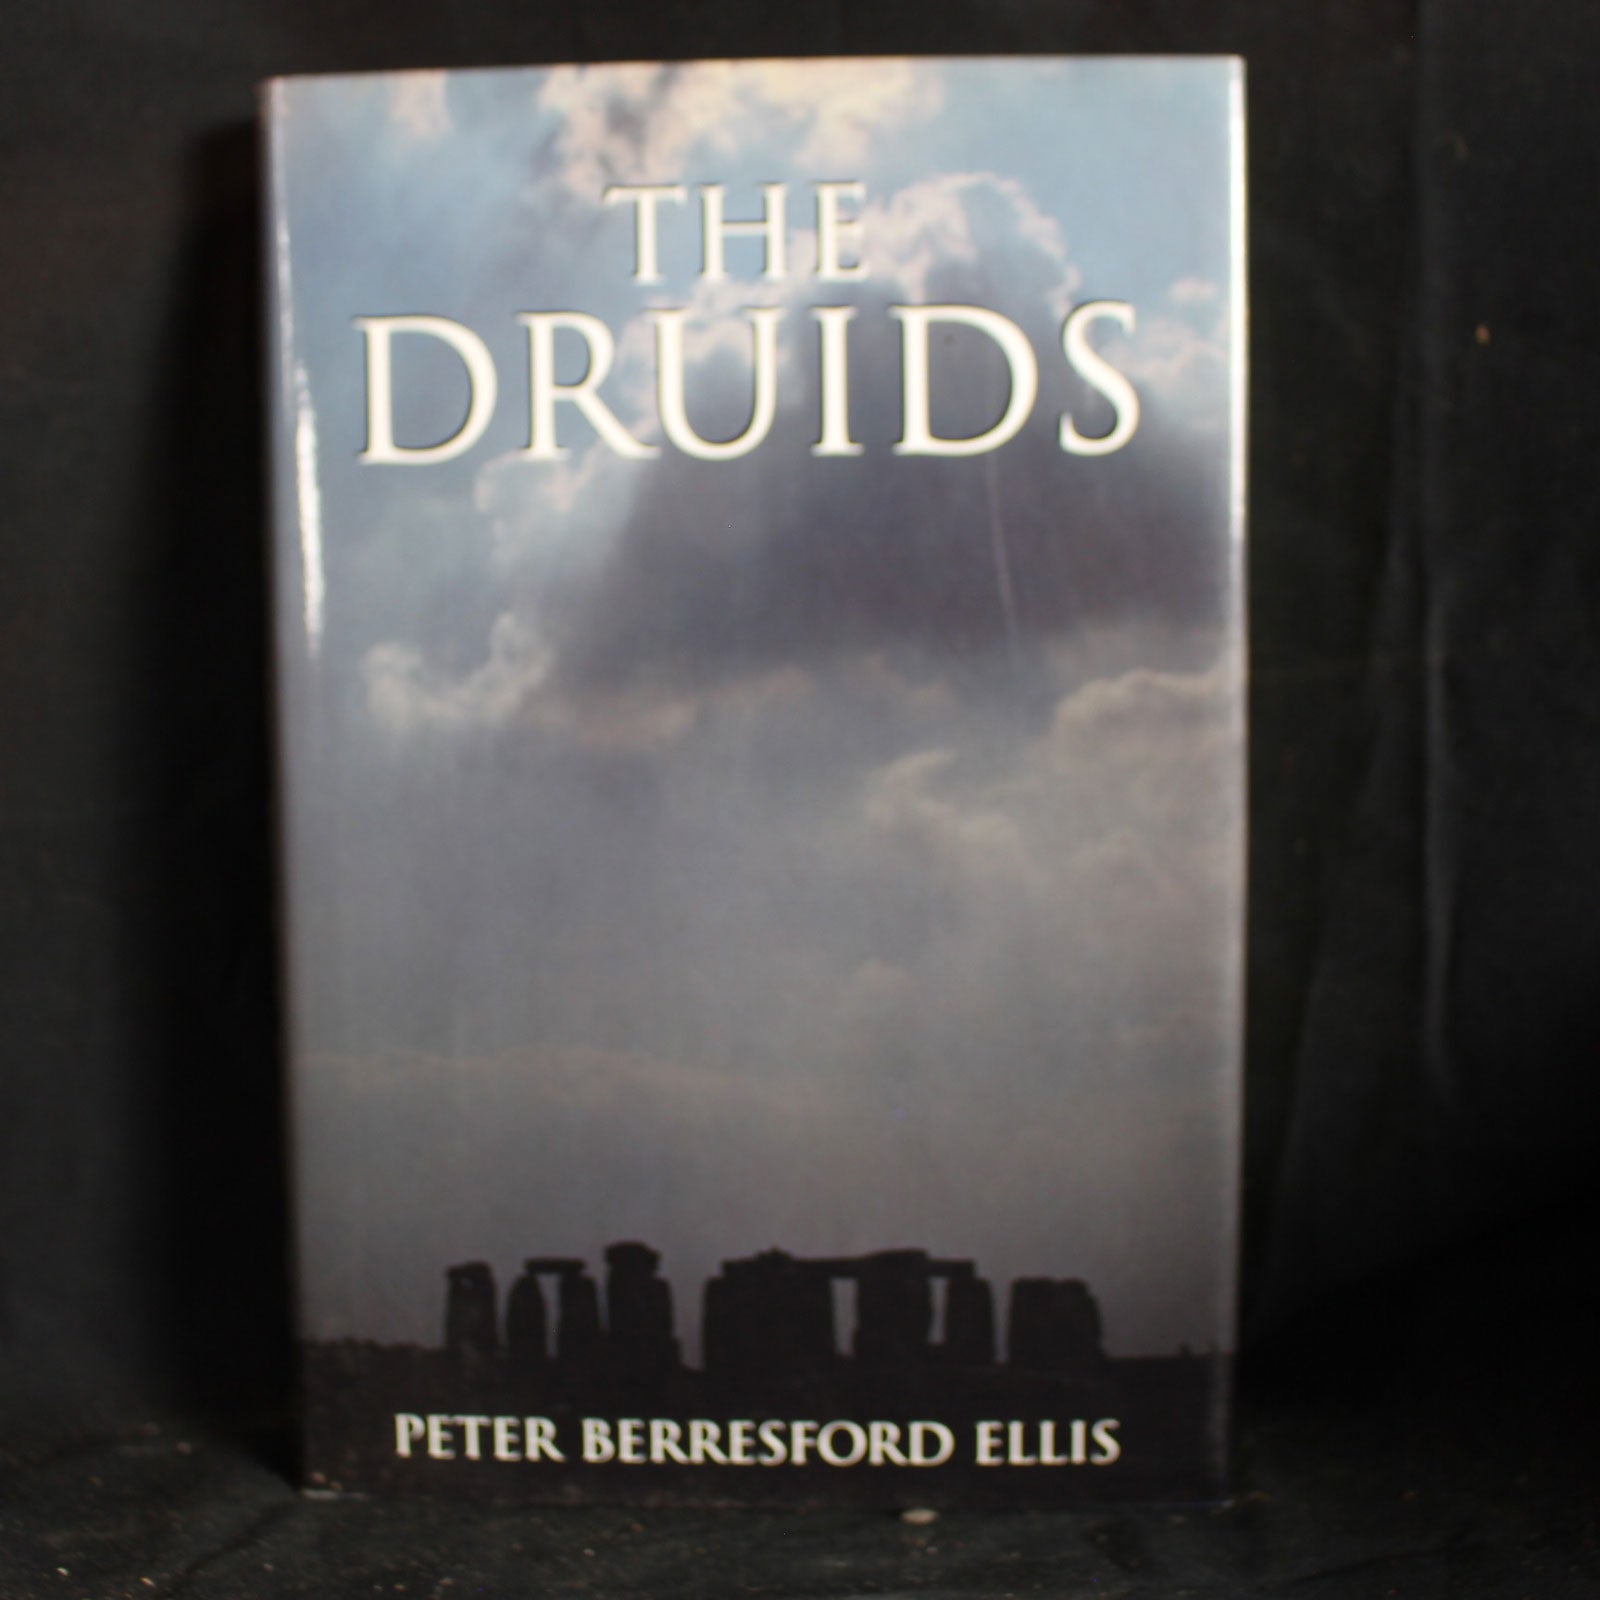 Hardcover The Druids by Peter Berresford Ellis, 1994